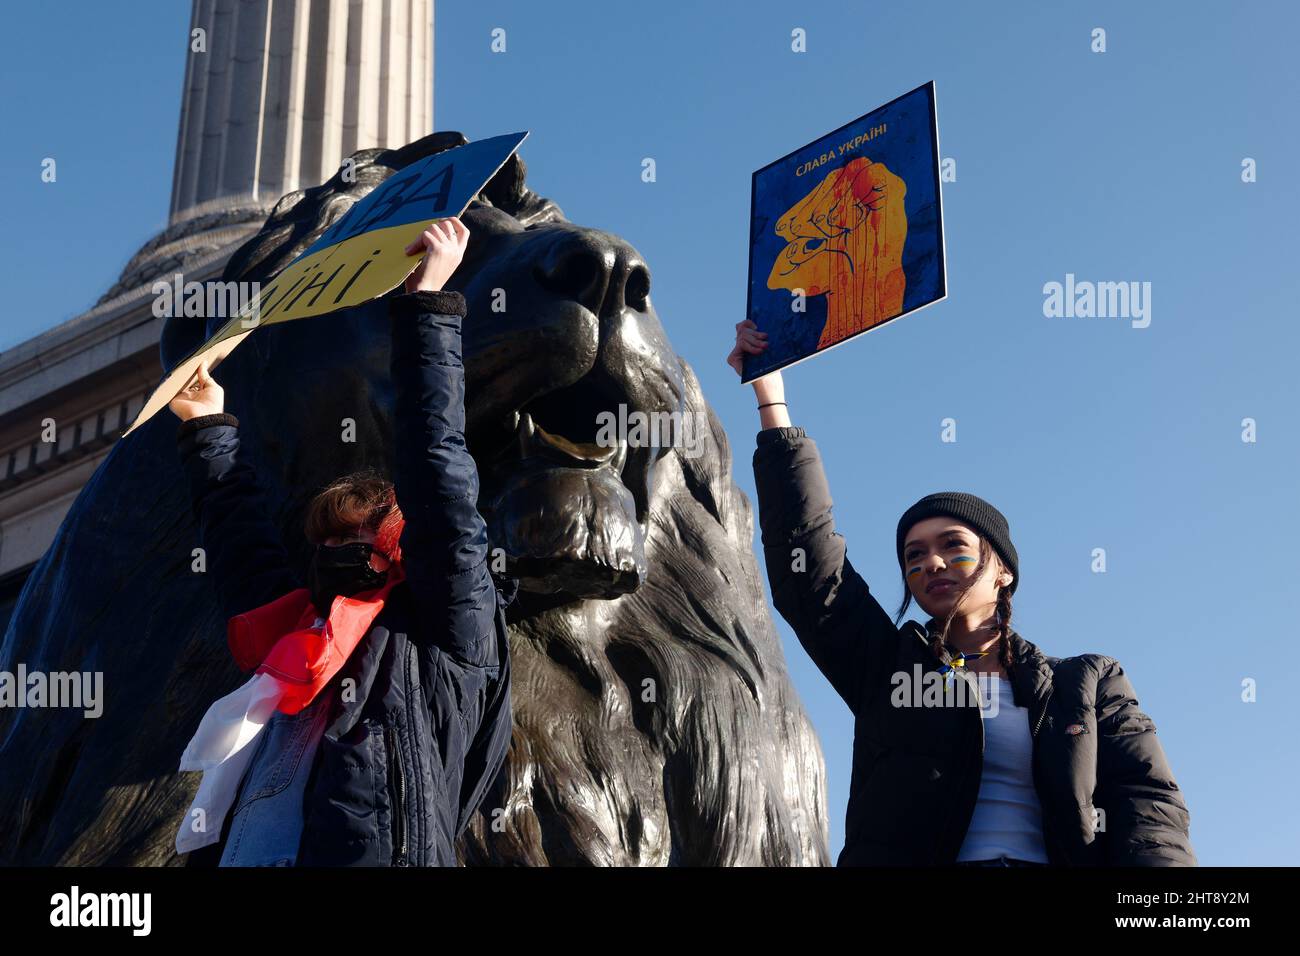 Two female protestors holding signs, protest against Russia's invasion of Ukraine, Trafalgar Square, Nelson's column, London, UK, 27 February 2022 Stock Photo